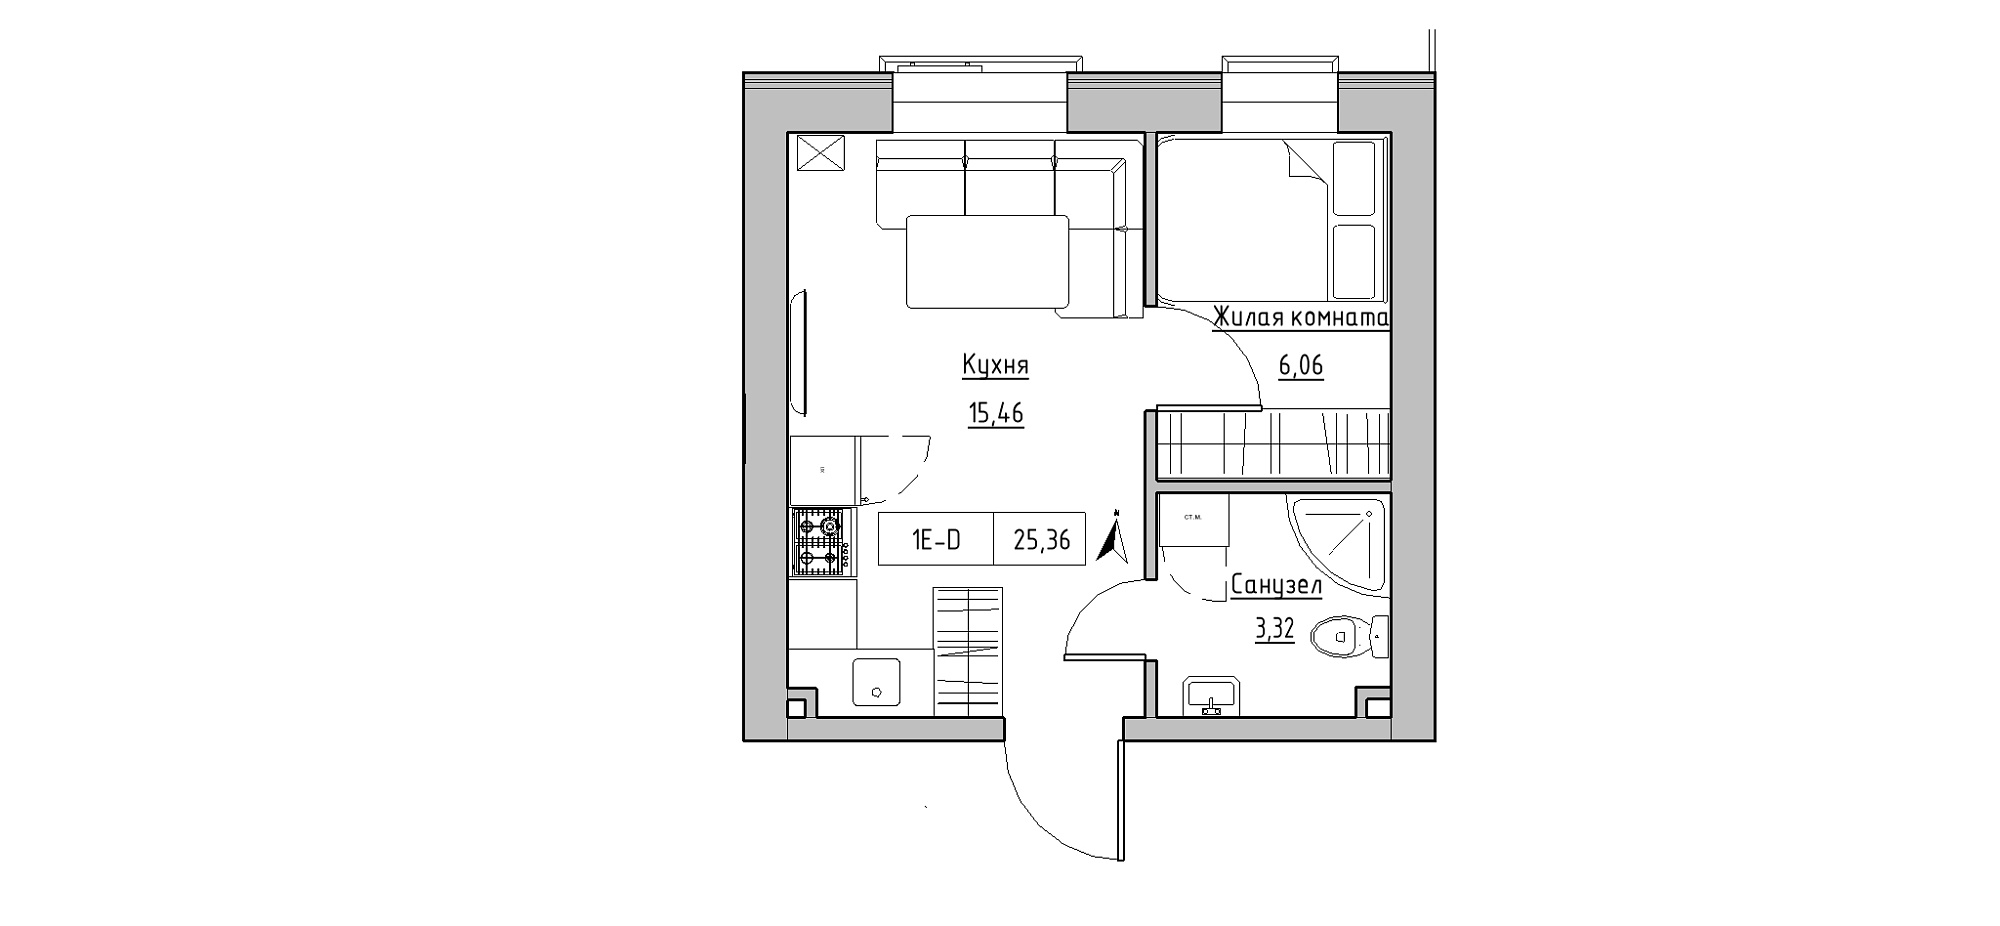 Planning 1-rm flats area 25.36m2, KS-020-04/0002.